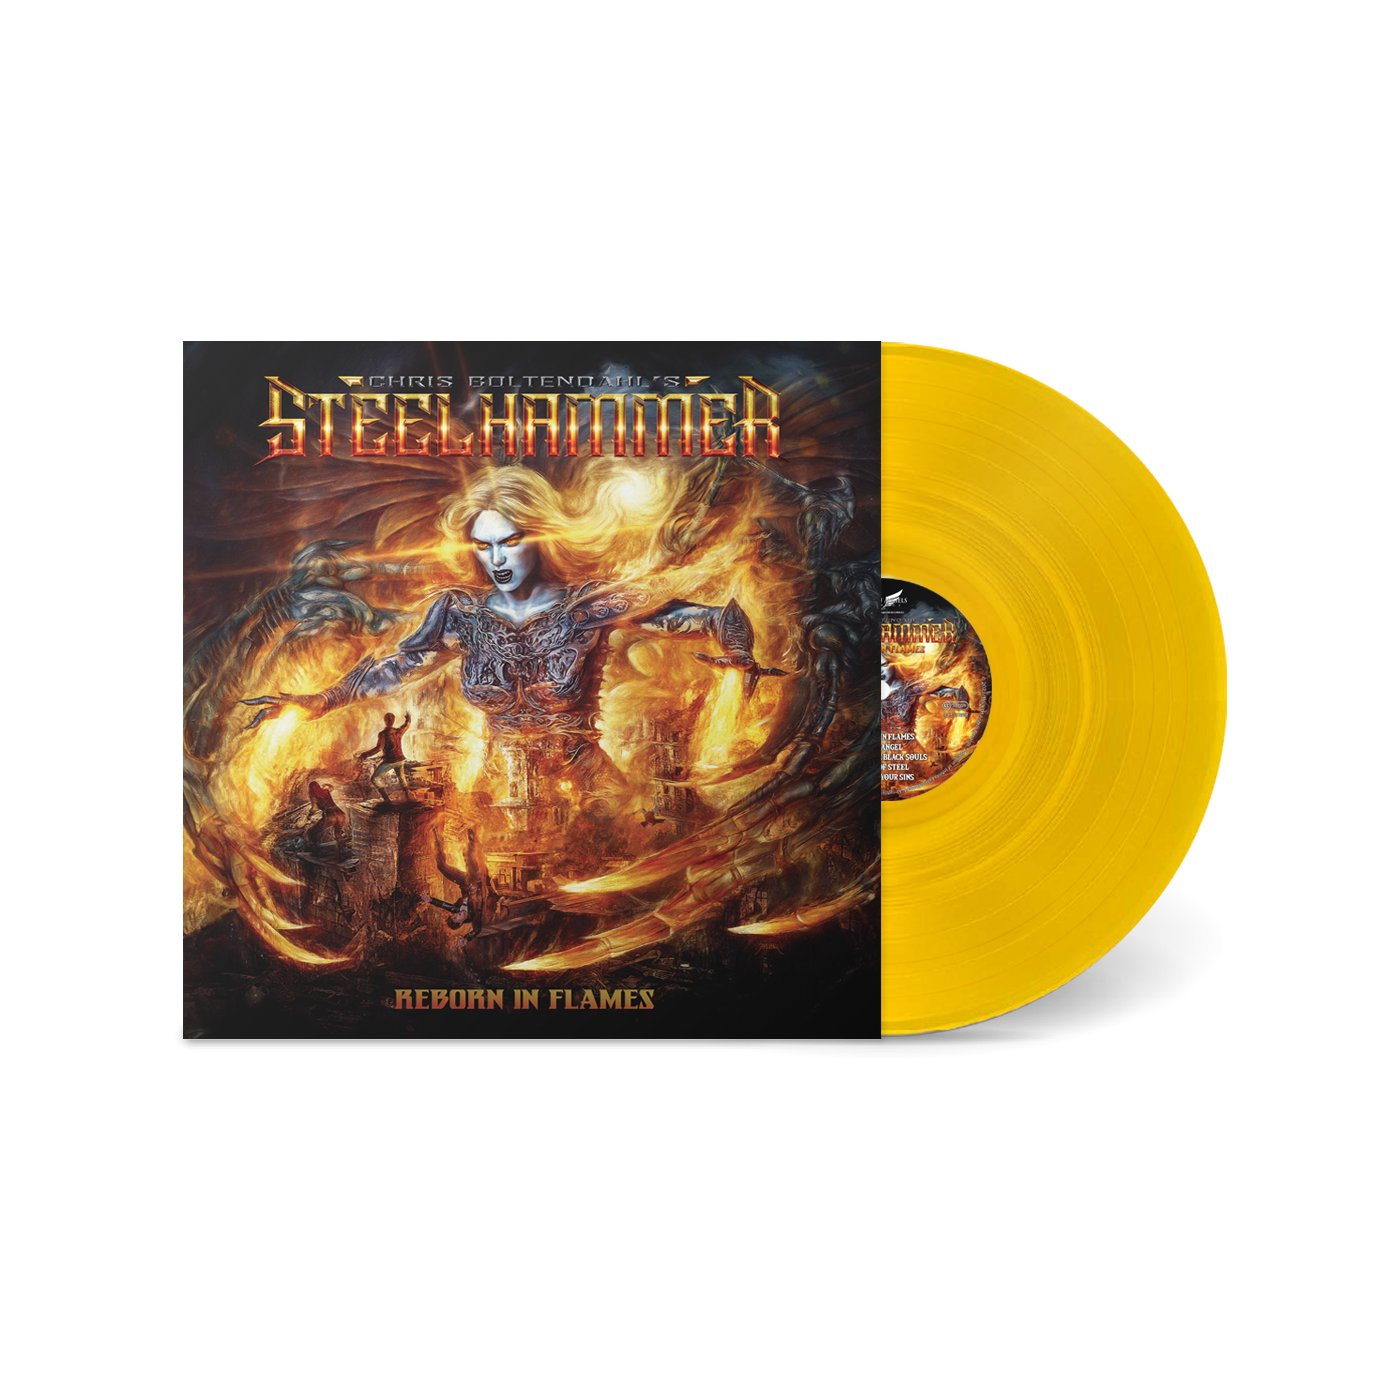 STEELHAMMER "Reborn In Flames" - YELLOW VINYL (Limited 50 Copies)